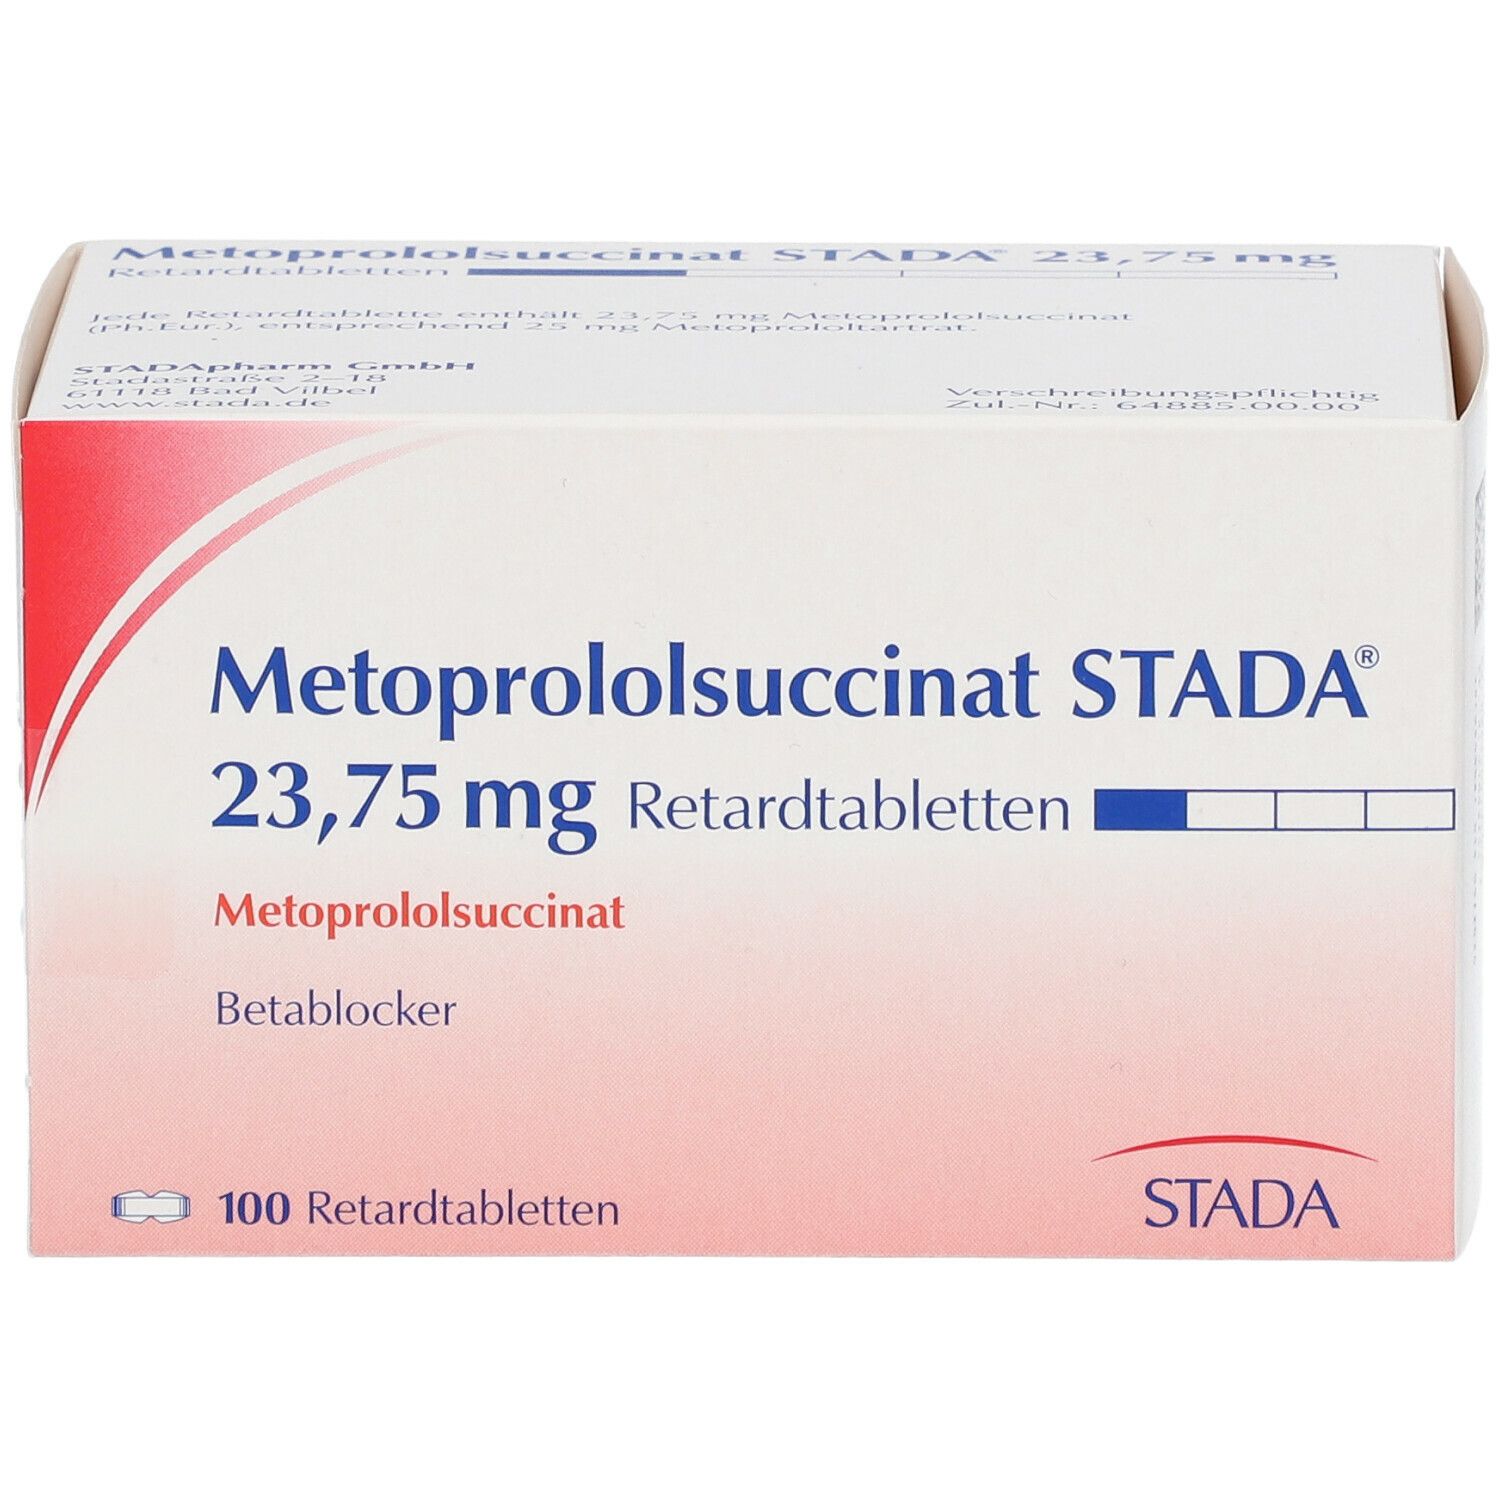 Metoprololsuccinat STADA® 23,75 mg